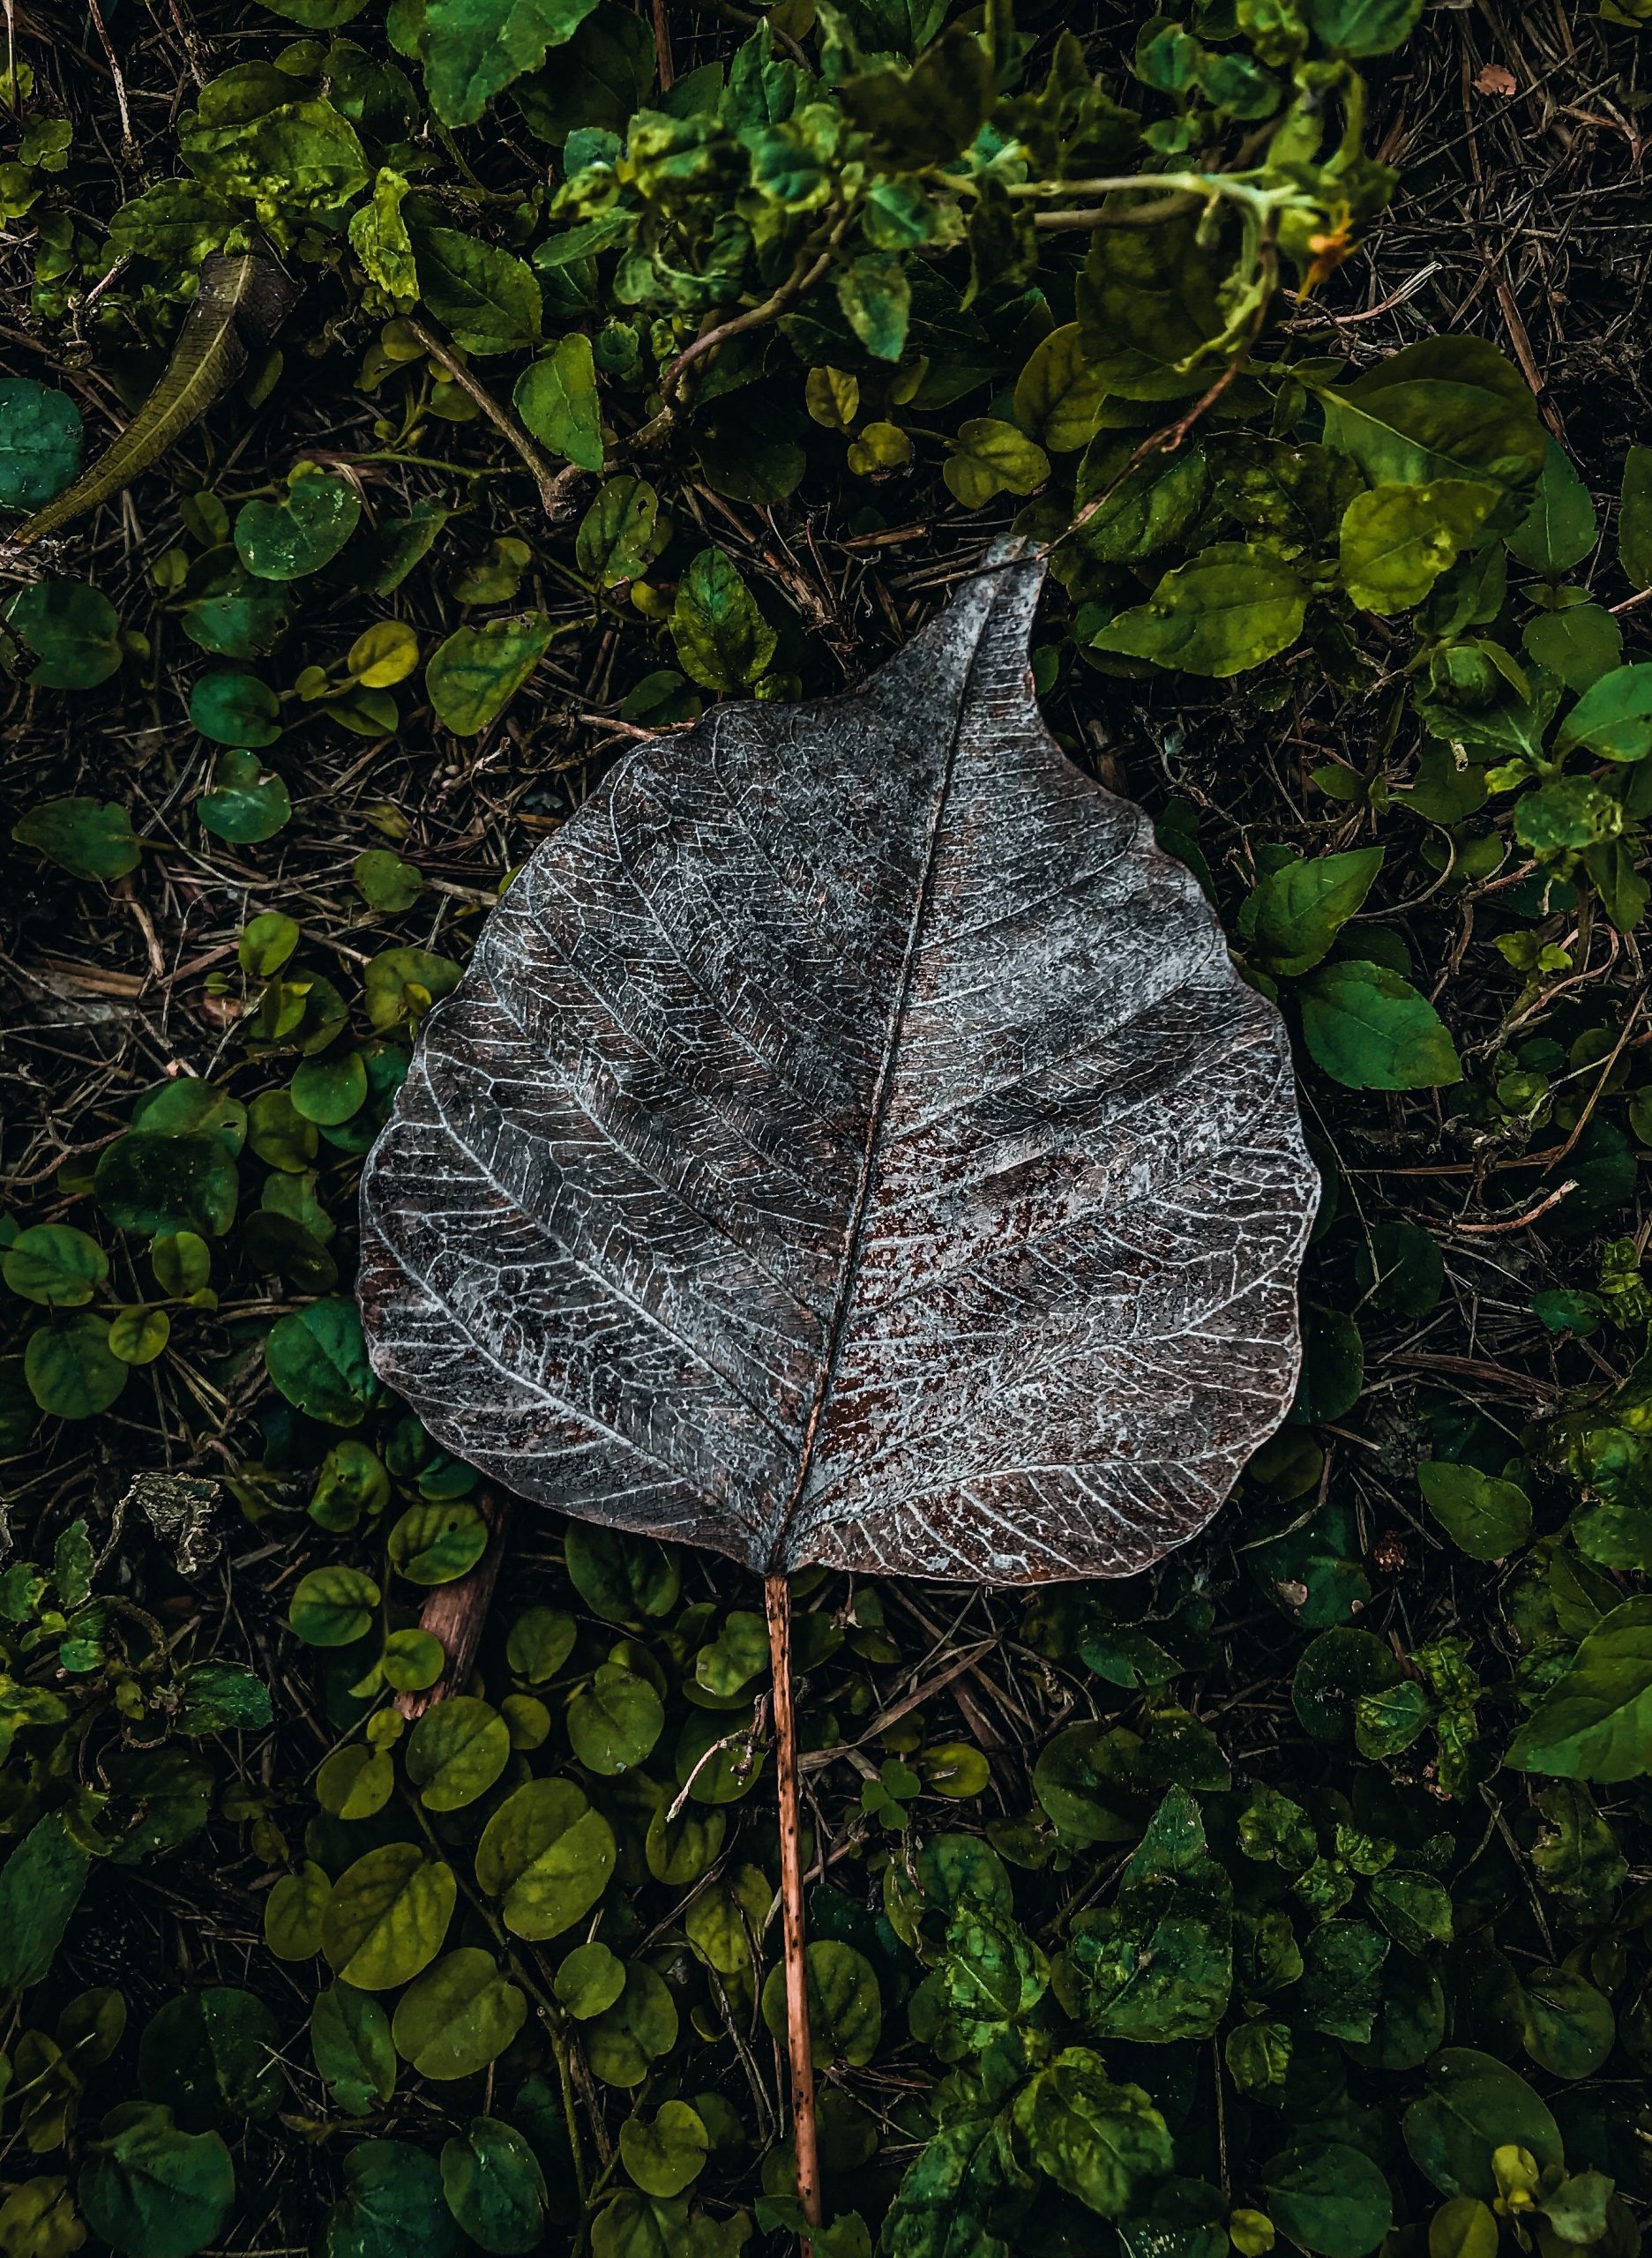 A dried leaf fallen on the ground